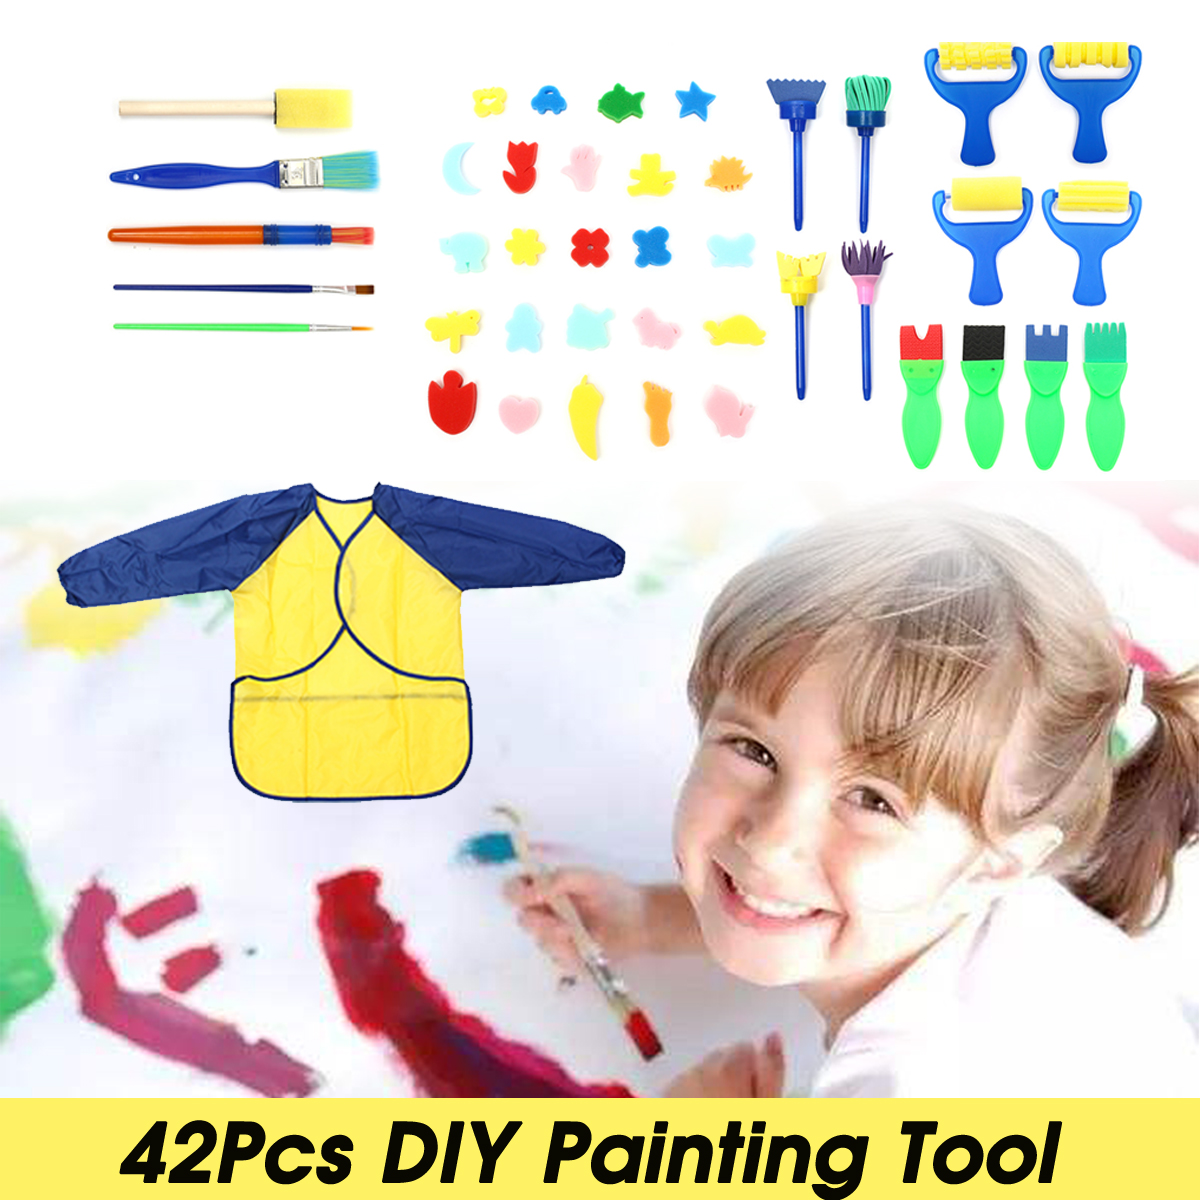 42Pcs-DIY-Child-Painting-Tool-Kit-Roller-Mold-Sponge-Educational-Drawing-Toys-Gift-1611444-1